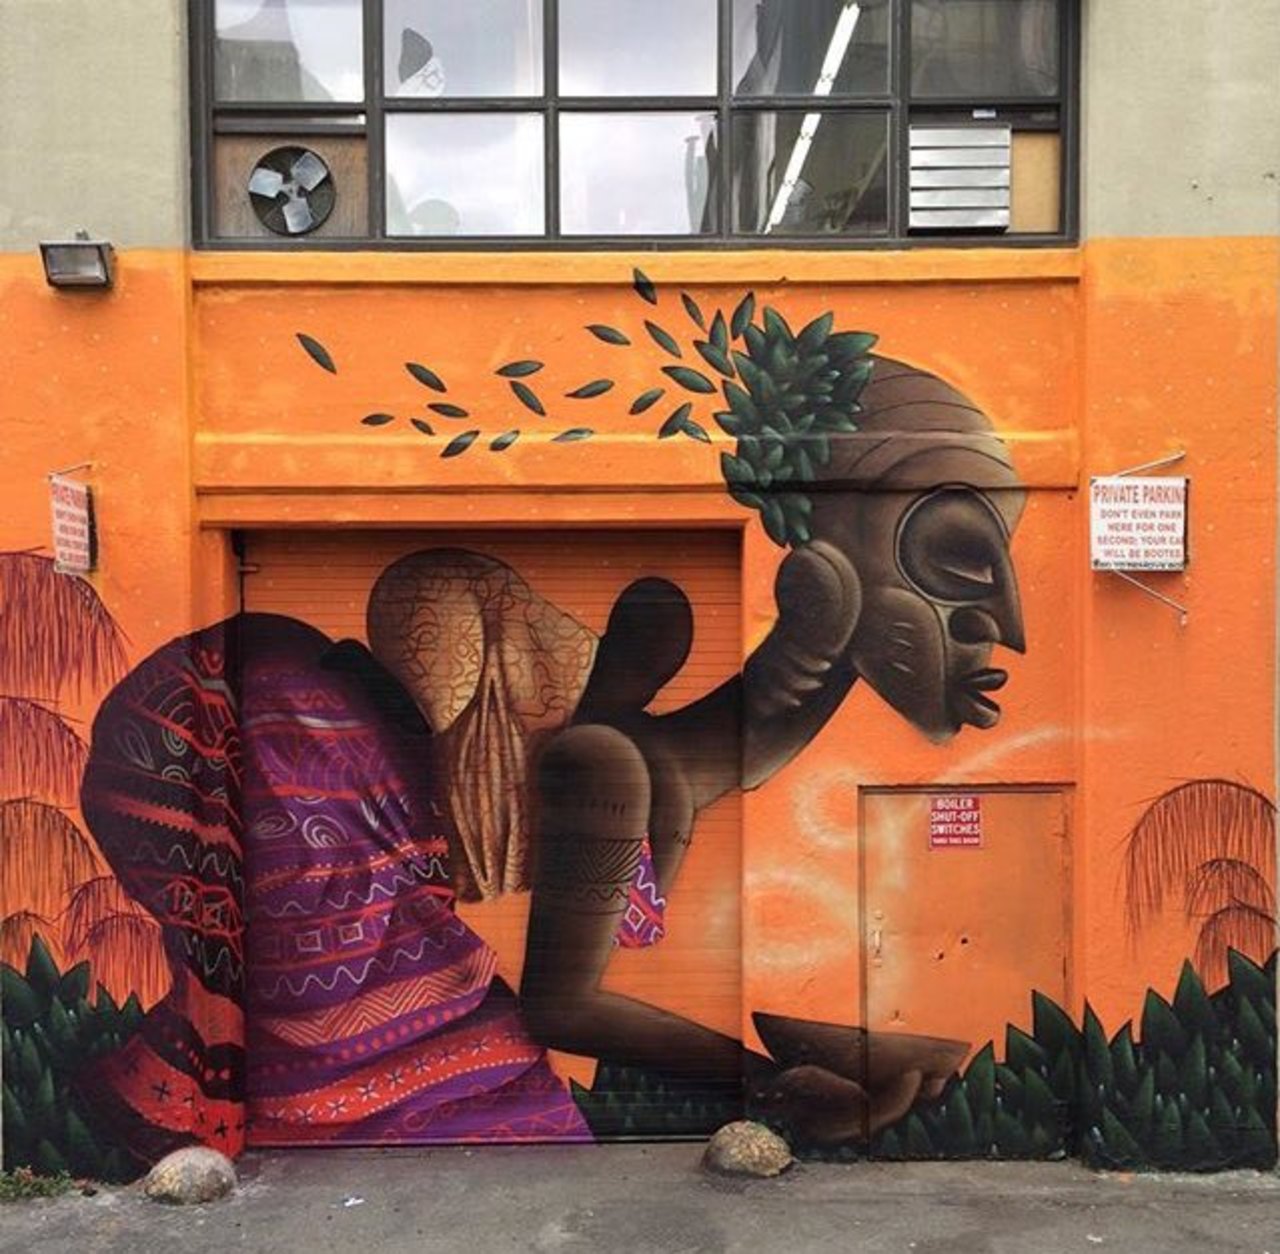 New Street Art by Alexandre Keto in NYC 

#art #graffiti #mural #streetart https://t.co/ashcGtqaJm